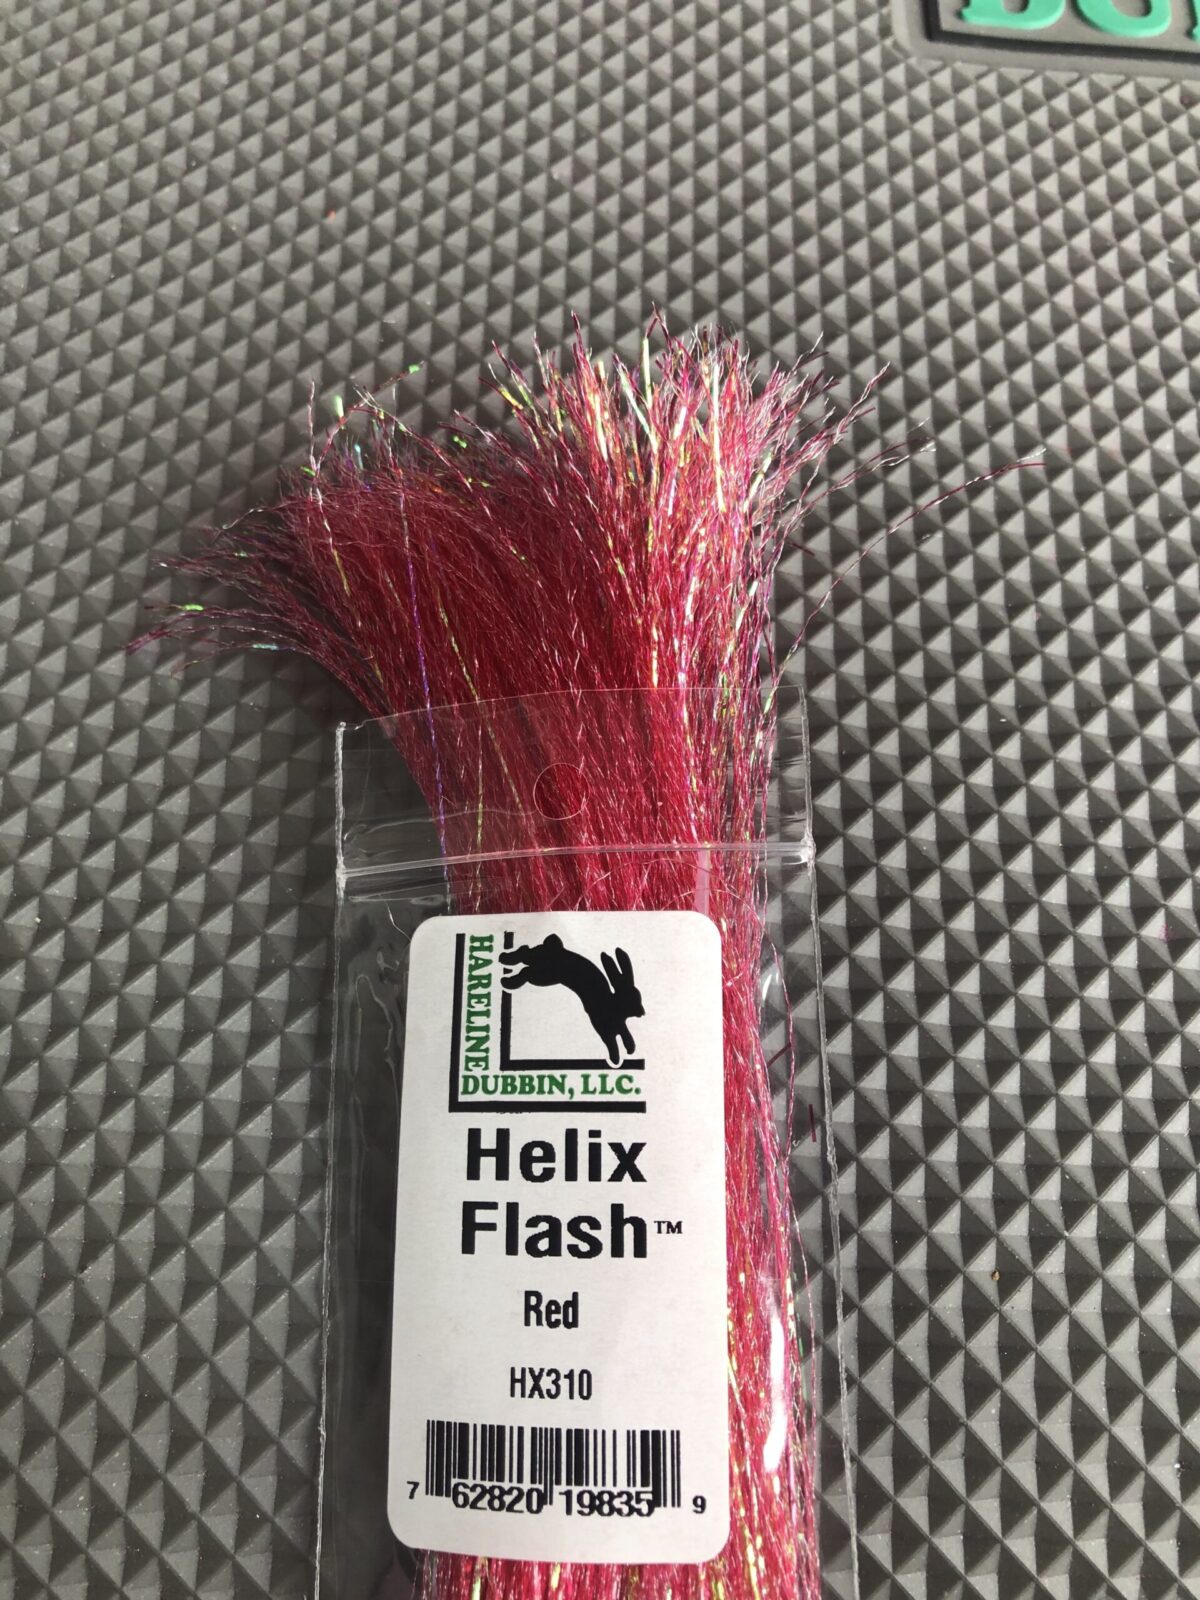 Helix Flash Red Dinger Jigs e1586114950273 scaled 1200x1600 - Krystal Flash & Helix Flash